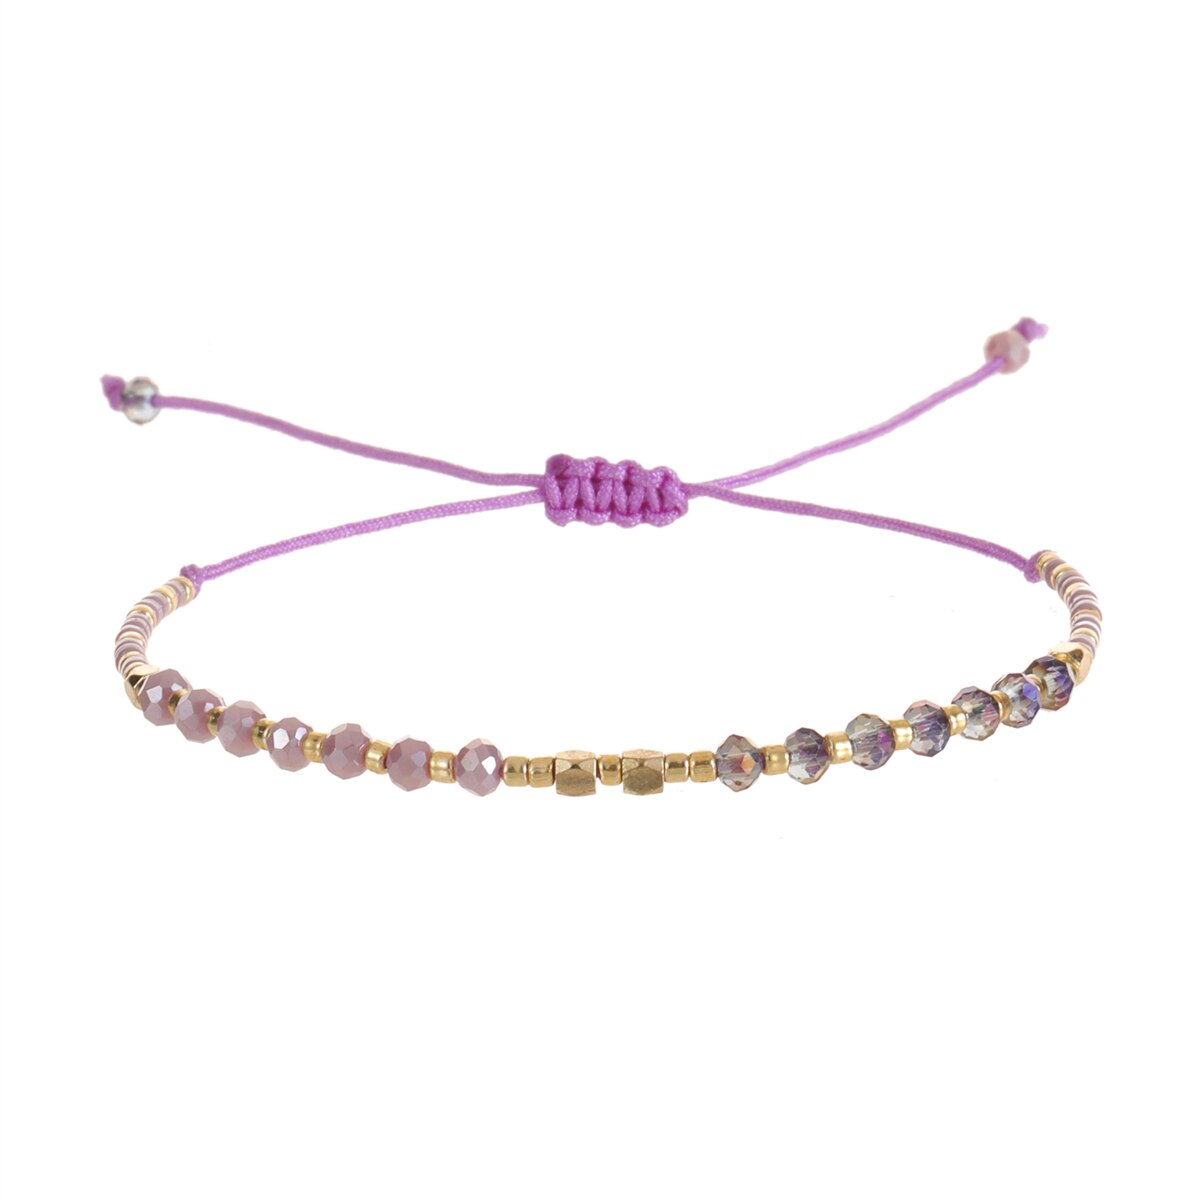 Fashion Glass Crystal Beaded Bracelets for Women Men Bracelet Beads Anklet Wrist Strap Ankle Jewelry Gift